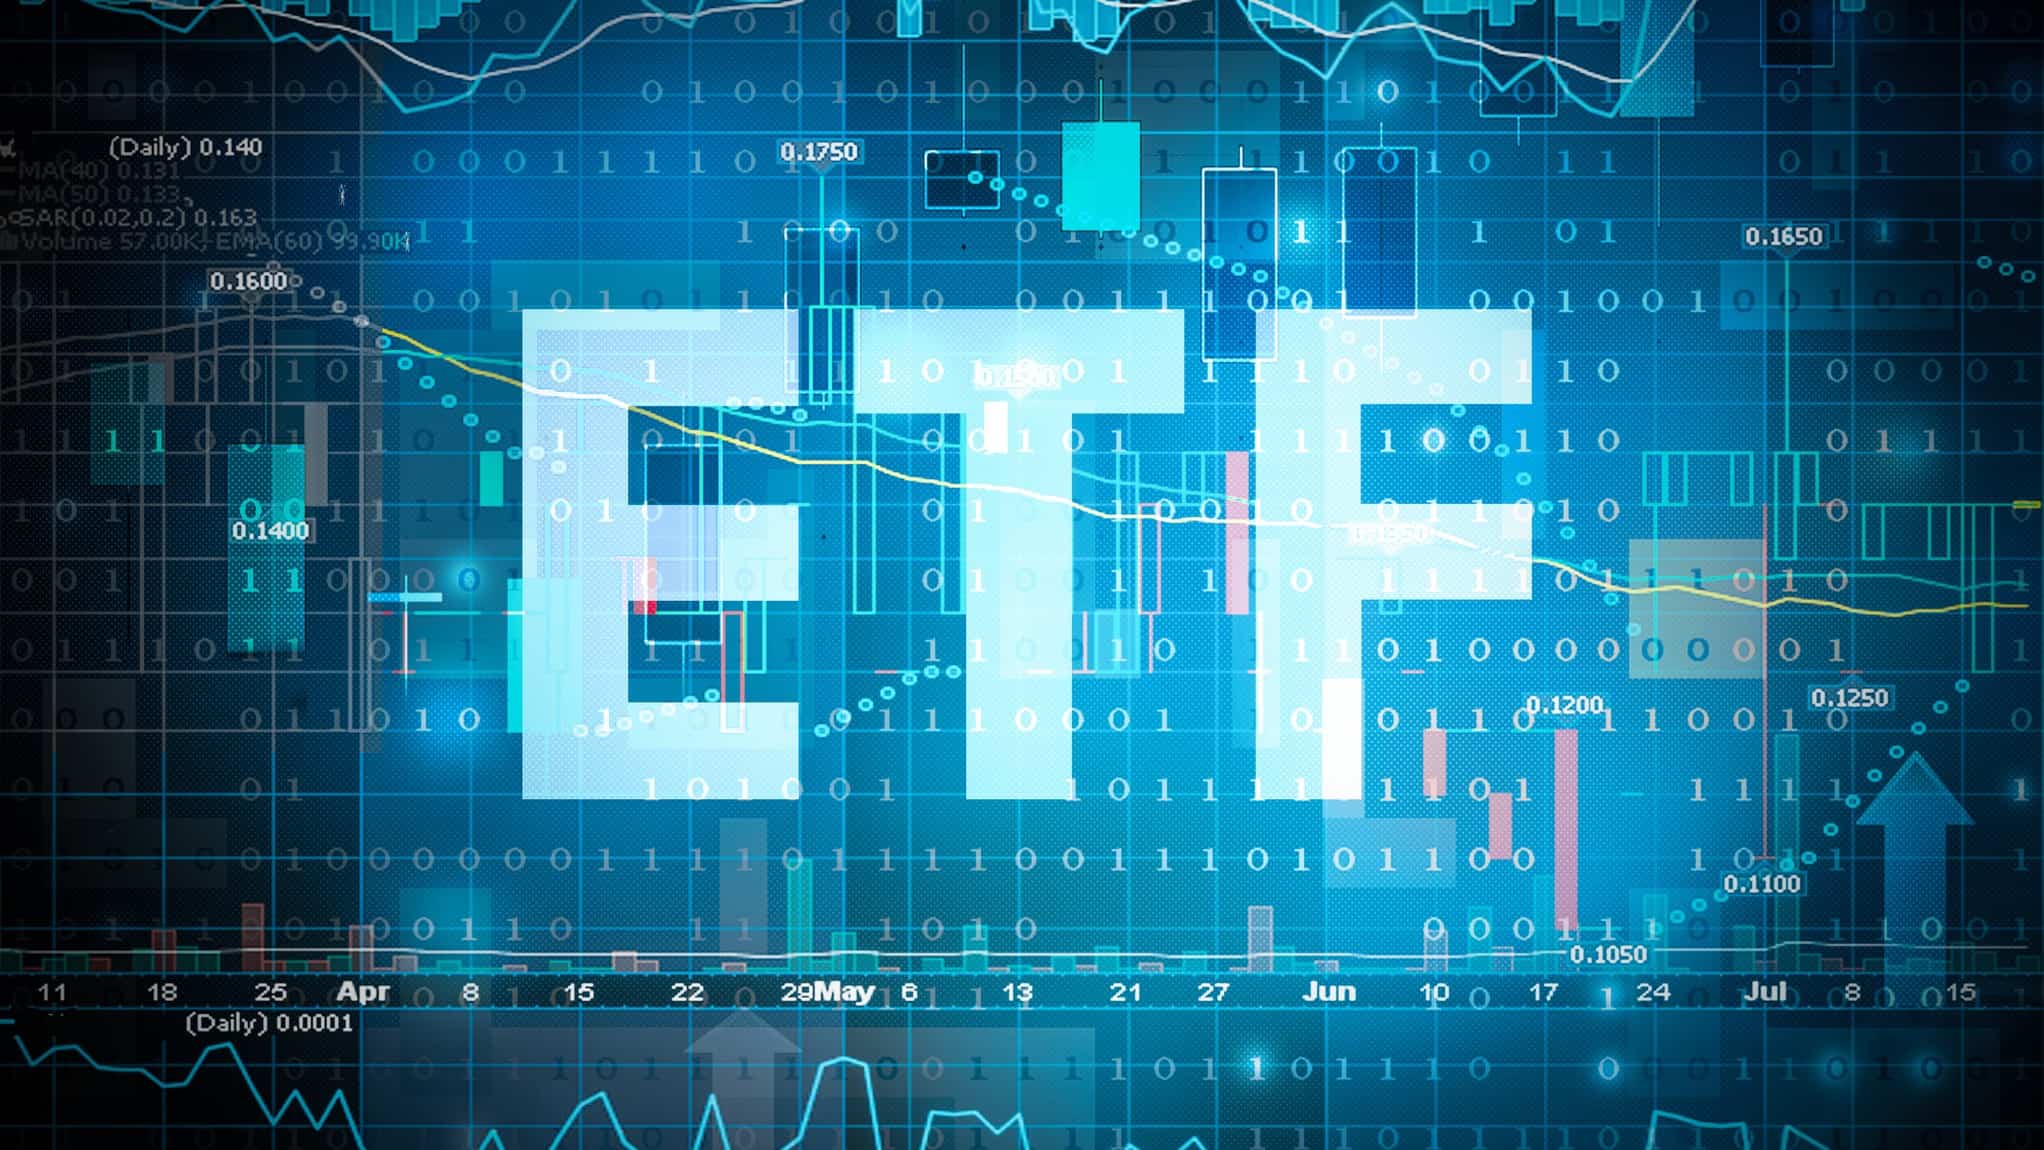 ETF written with a blue digital background.